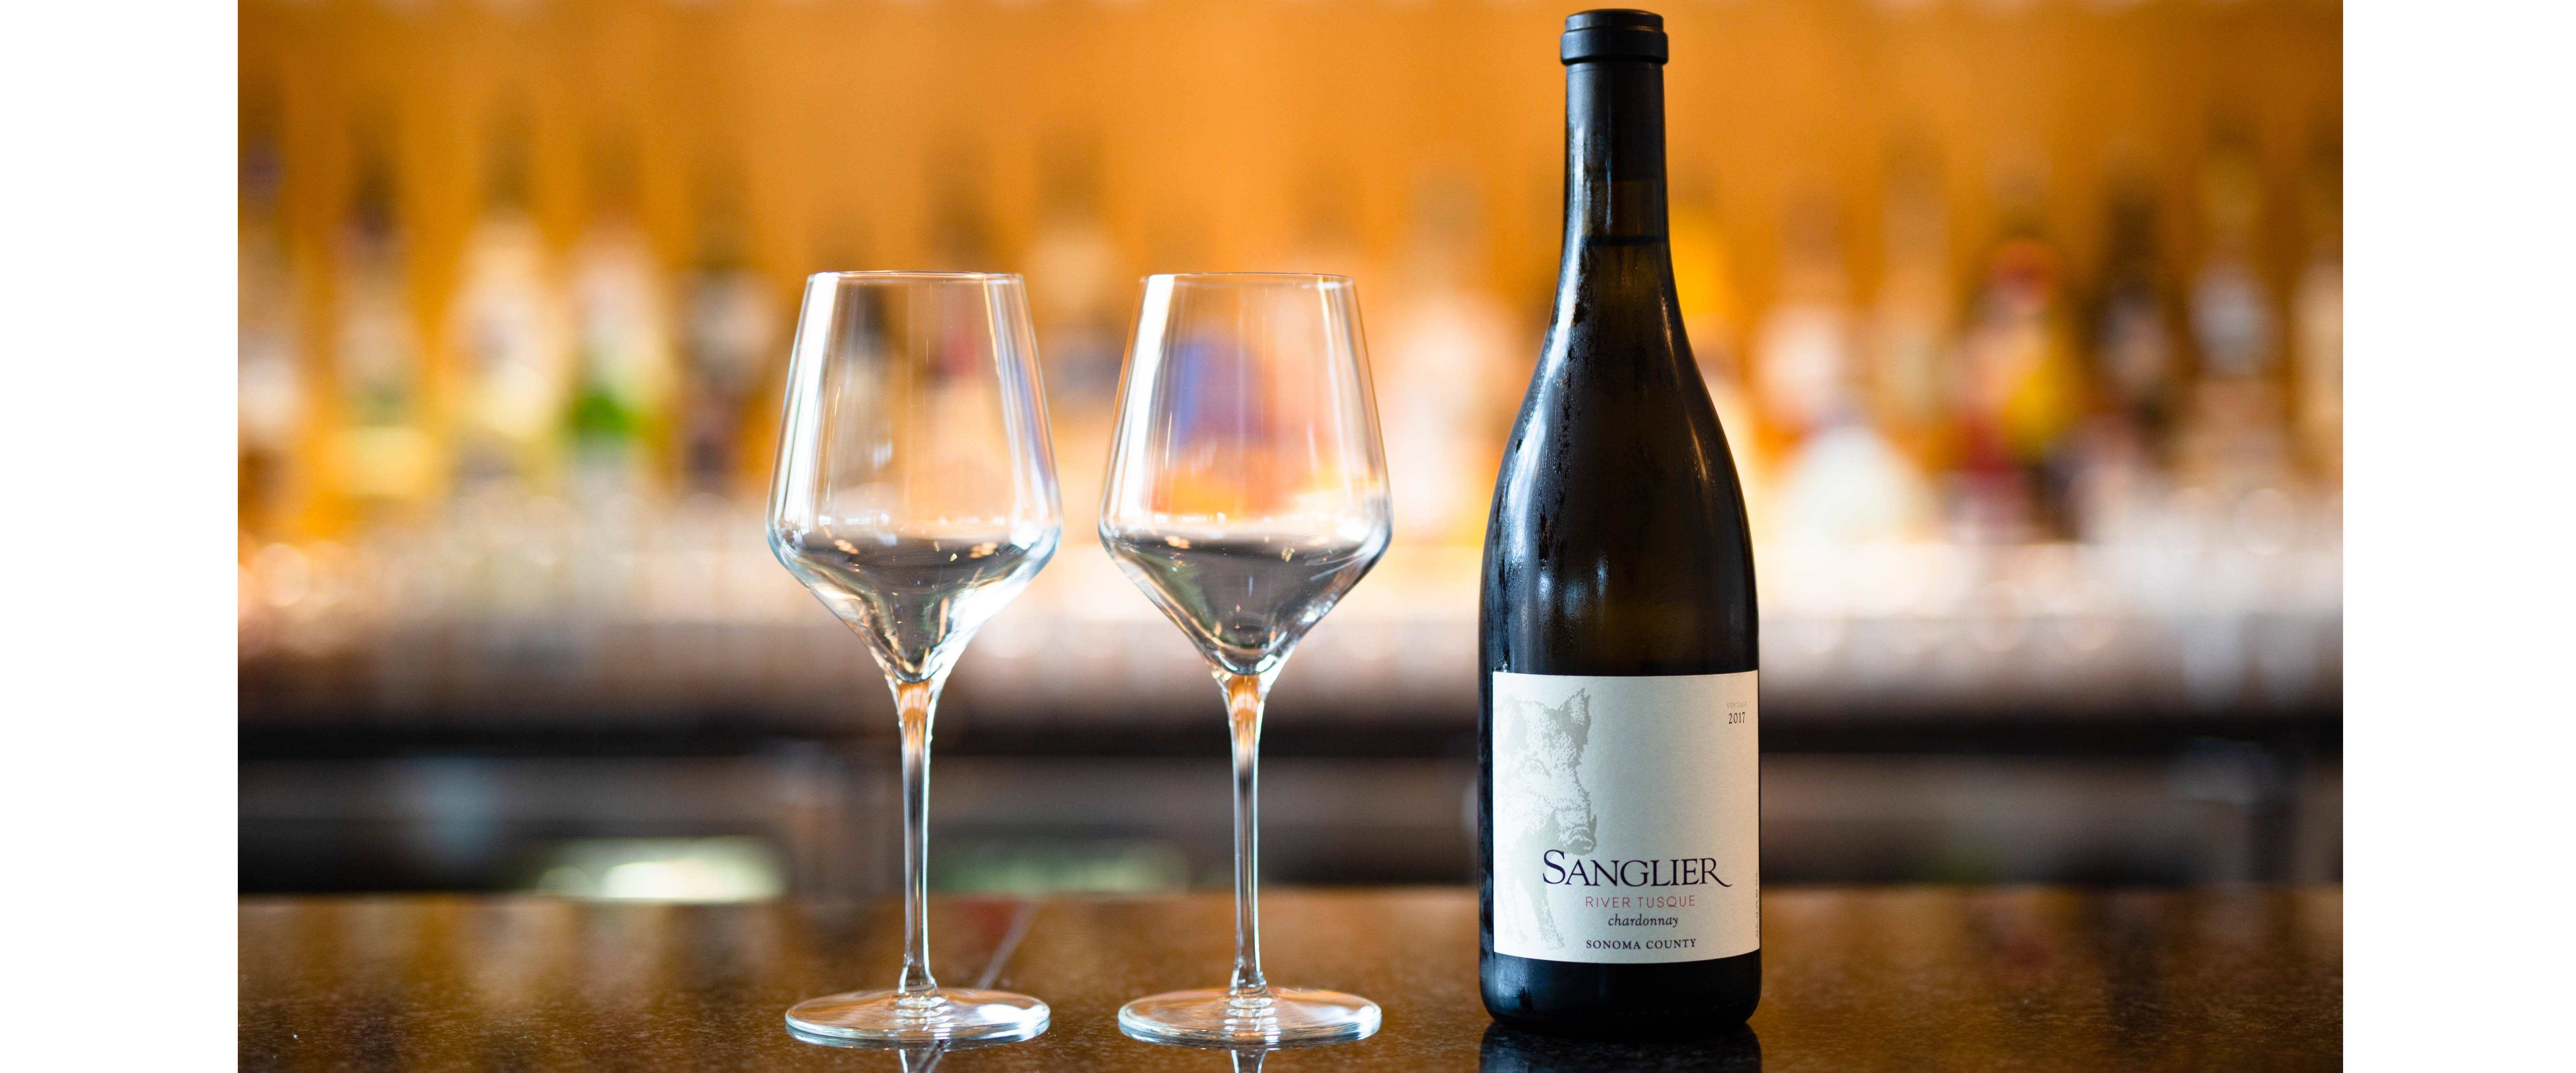 Sanglier_Wine_Bottle_and_Glasses_on_Cafe_bar